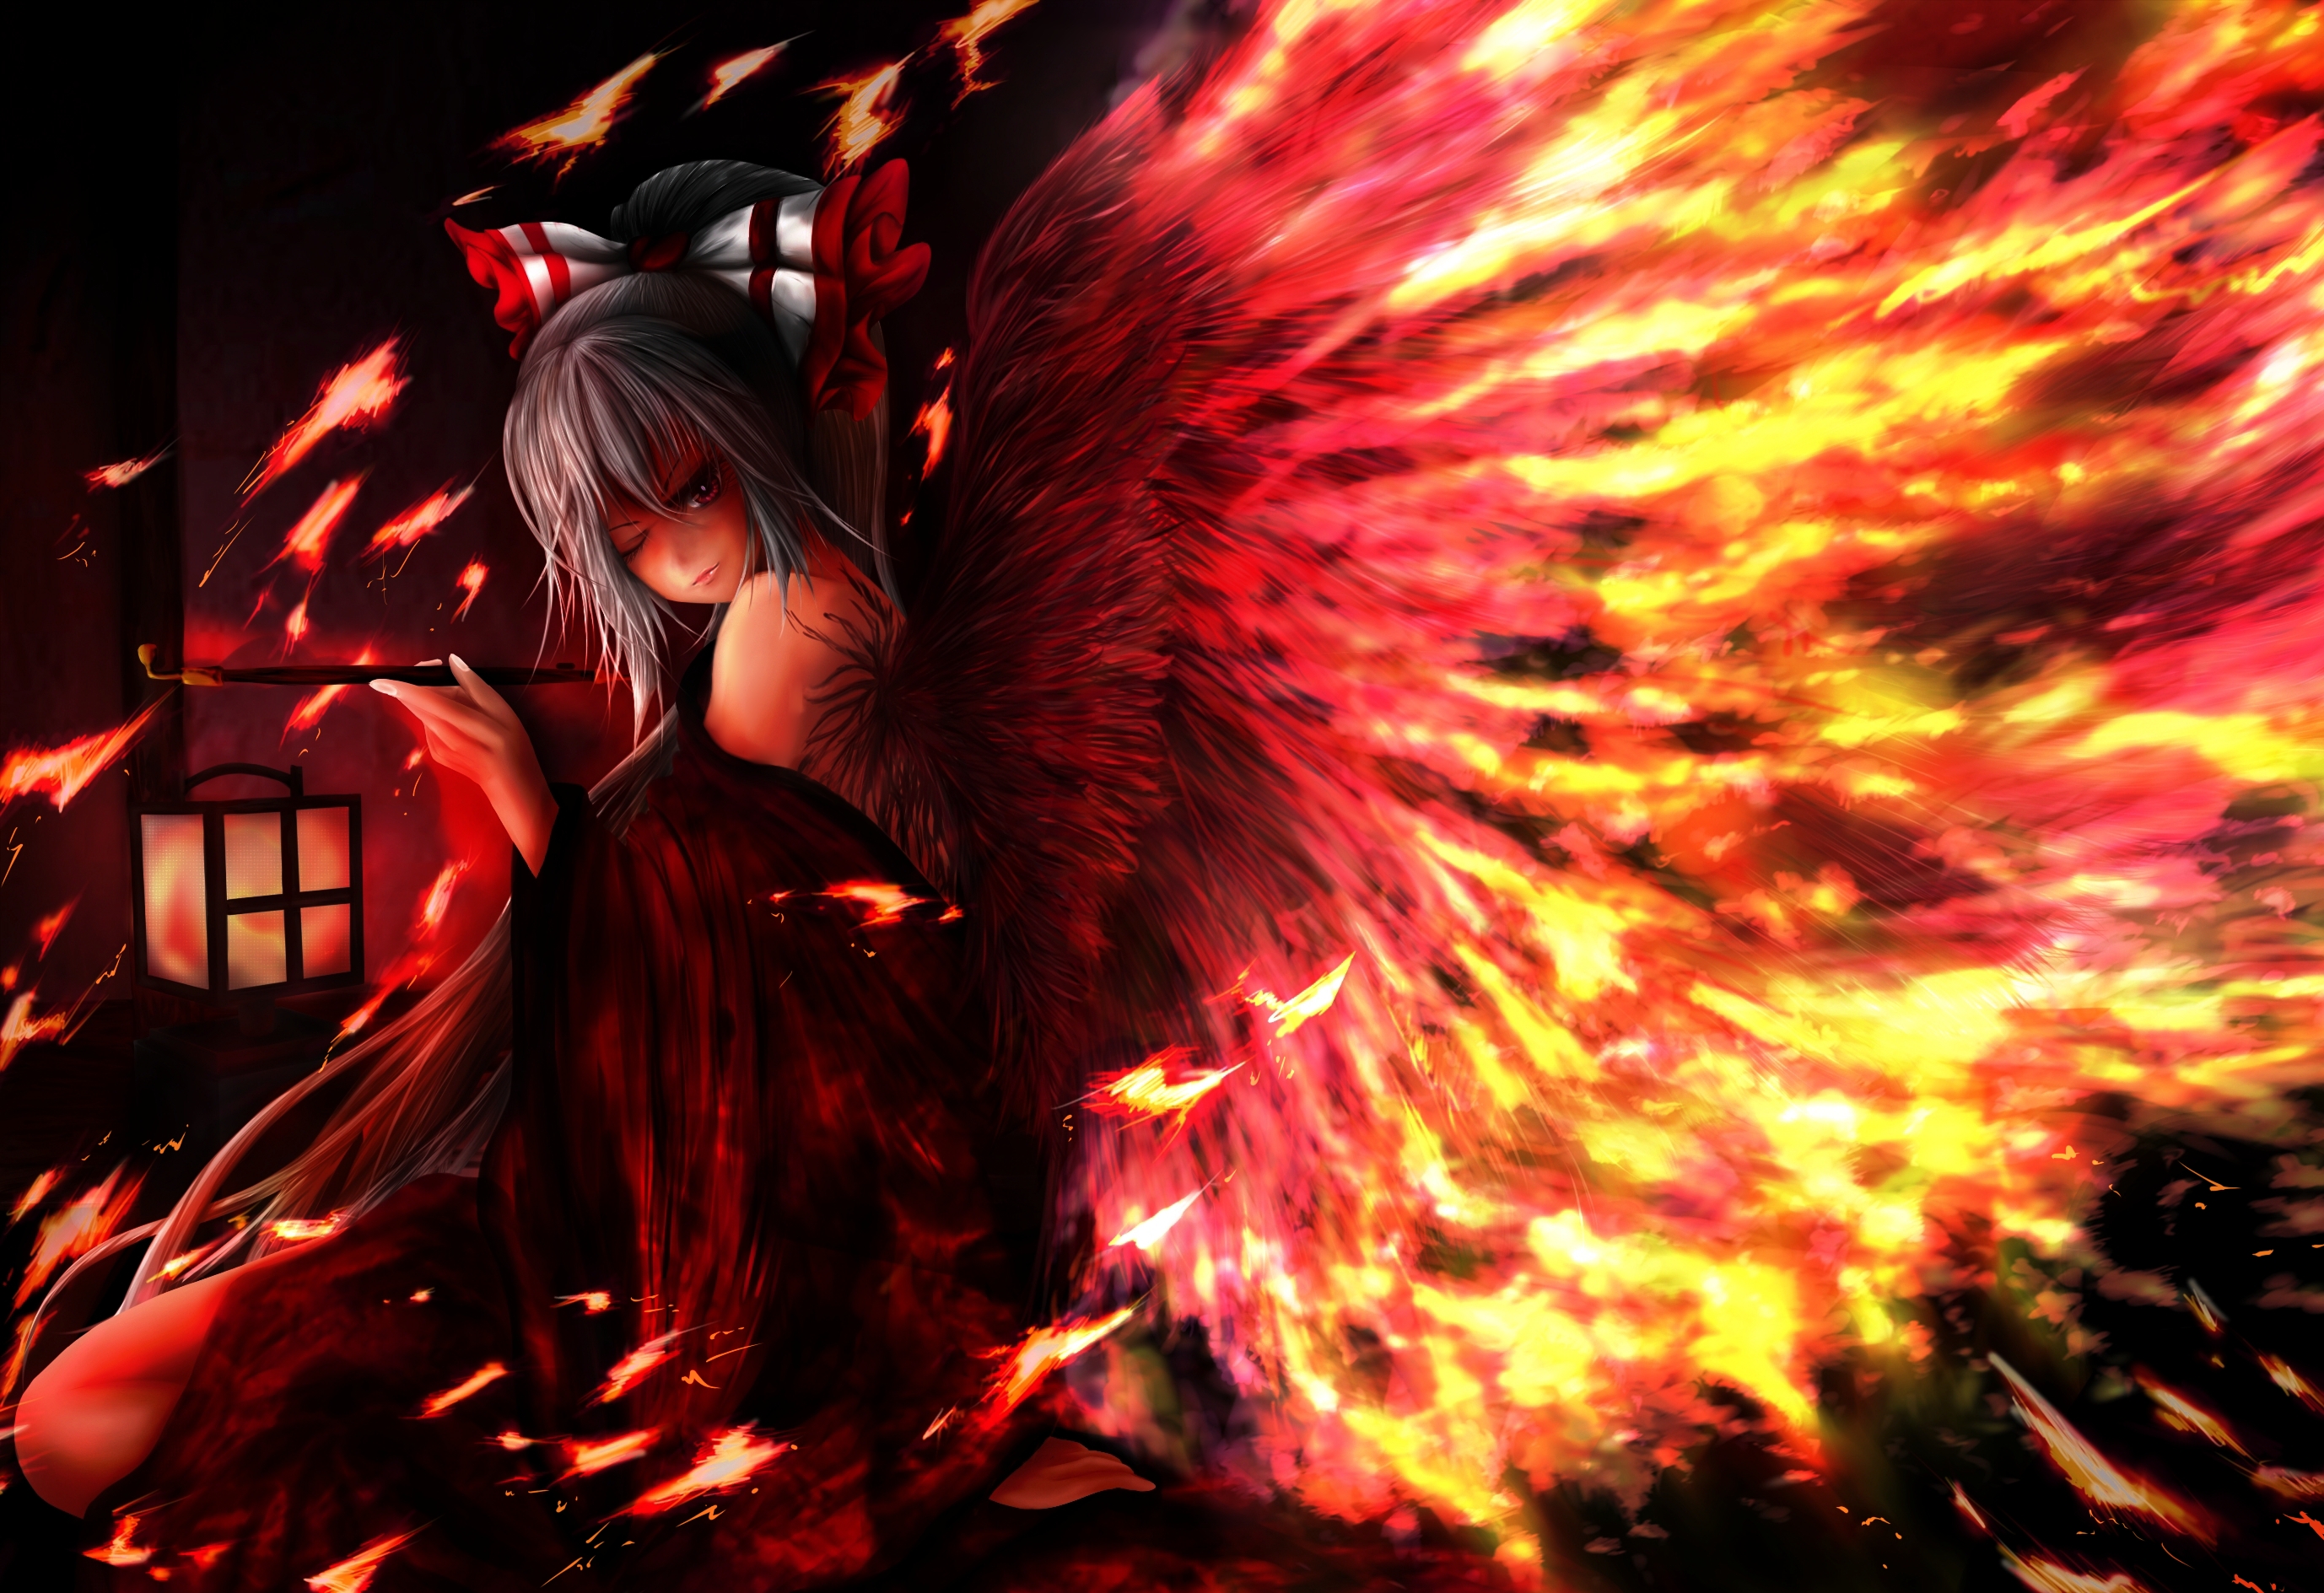 Art Angels Fire Wings Girl Gothic Dark Horror Wallpaper Background